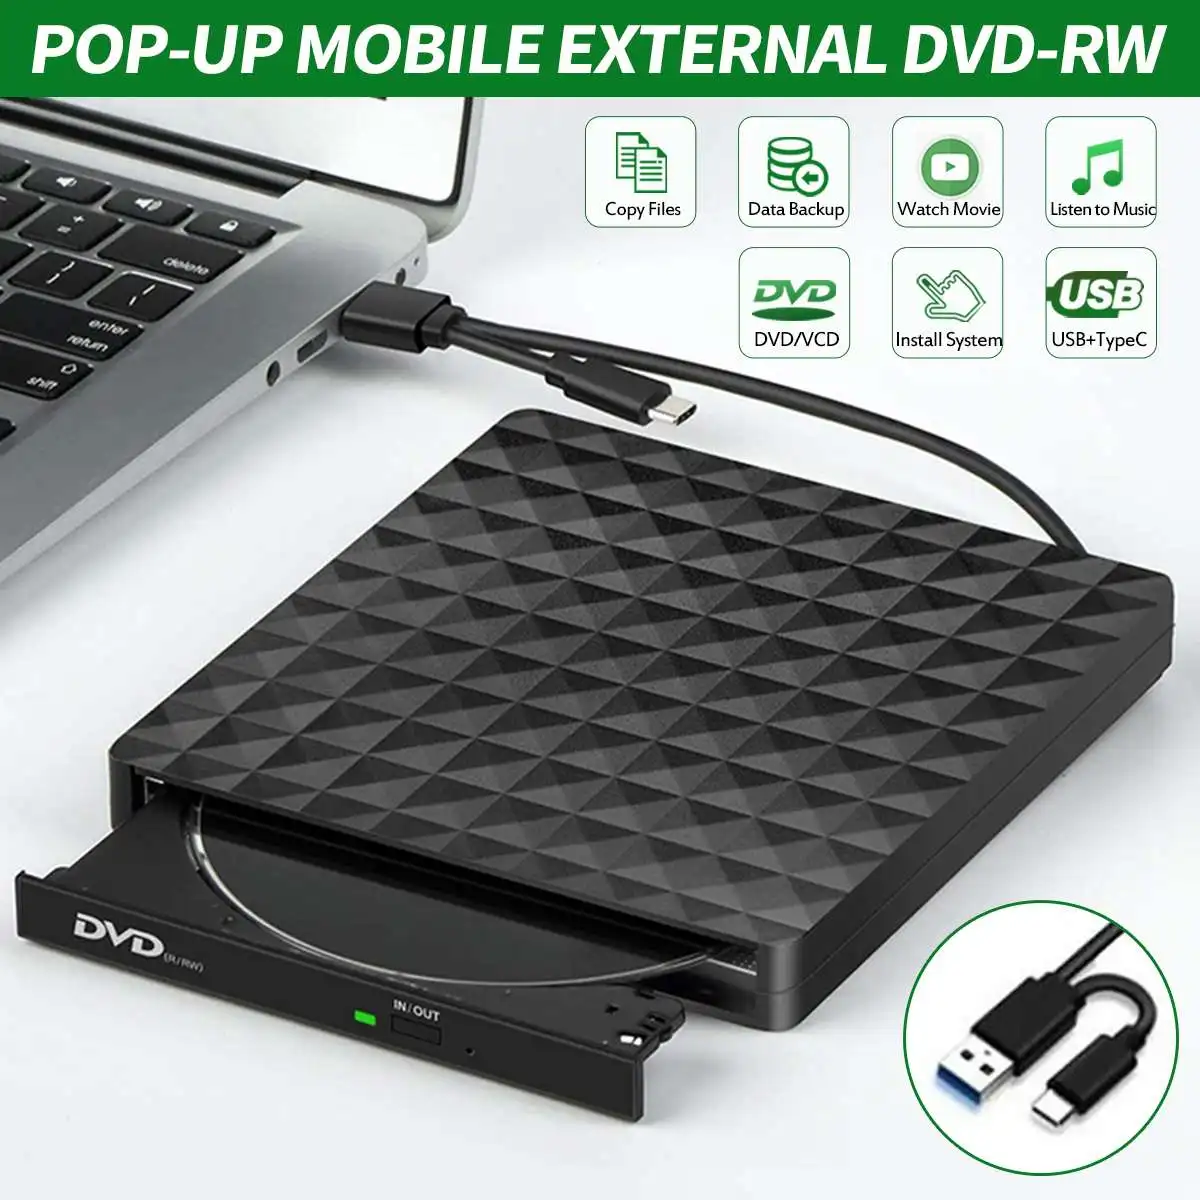 DVD Drive, CD Burner Driver Drive-free High-speed Read-write Recorder, External DVD-RW Player Writer Reader USB 3.0 &Type C